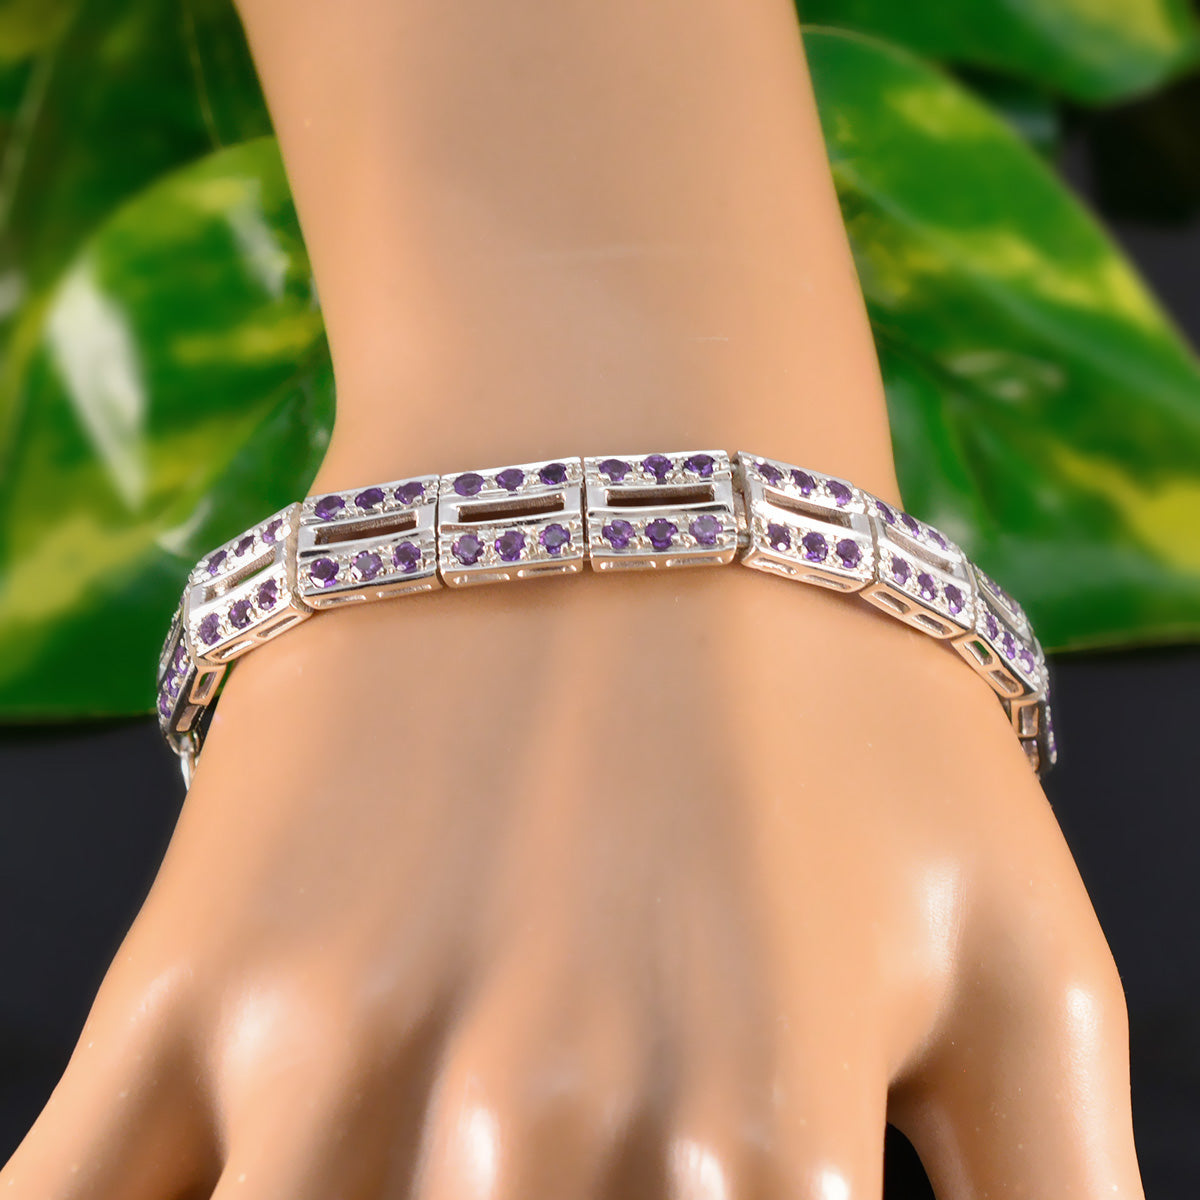 Riyo Exporter 925 Sterling Silver Bracelet For Girl Amethyst Bracelet Bezel Setting Bracelet with Fish Hook Link Charm Bracelet L Size 6-8.5 Inch.